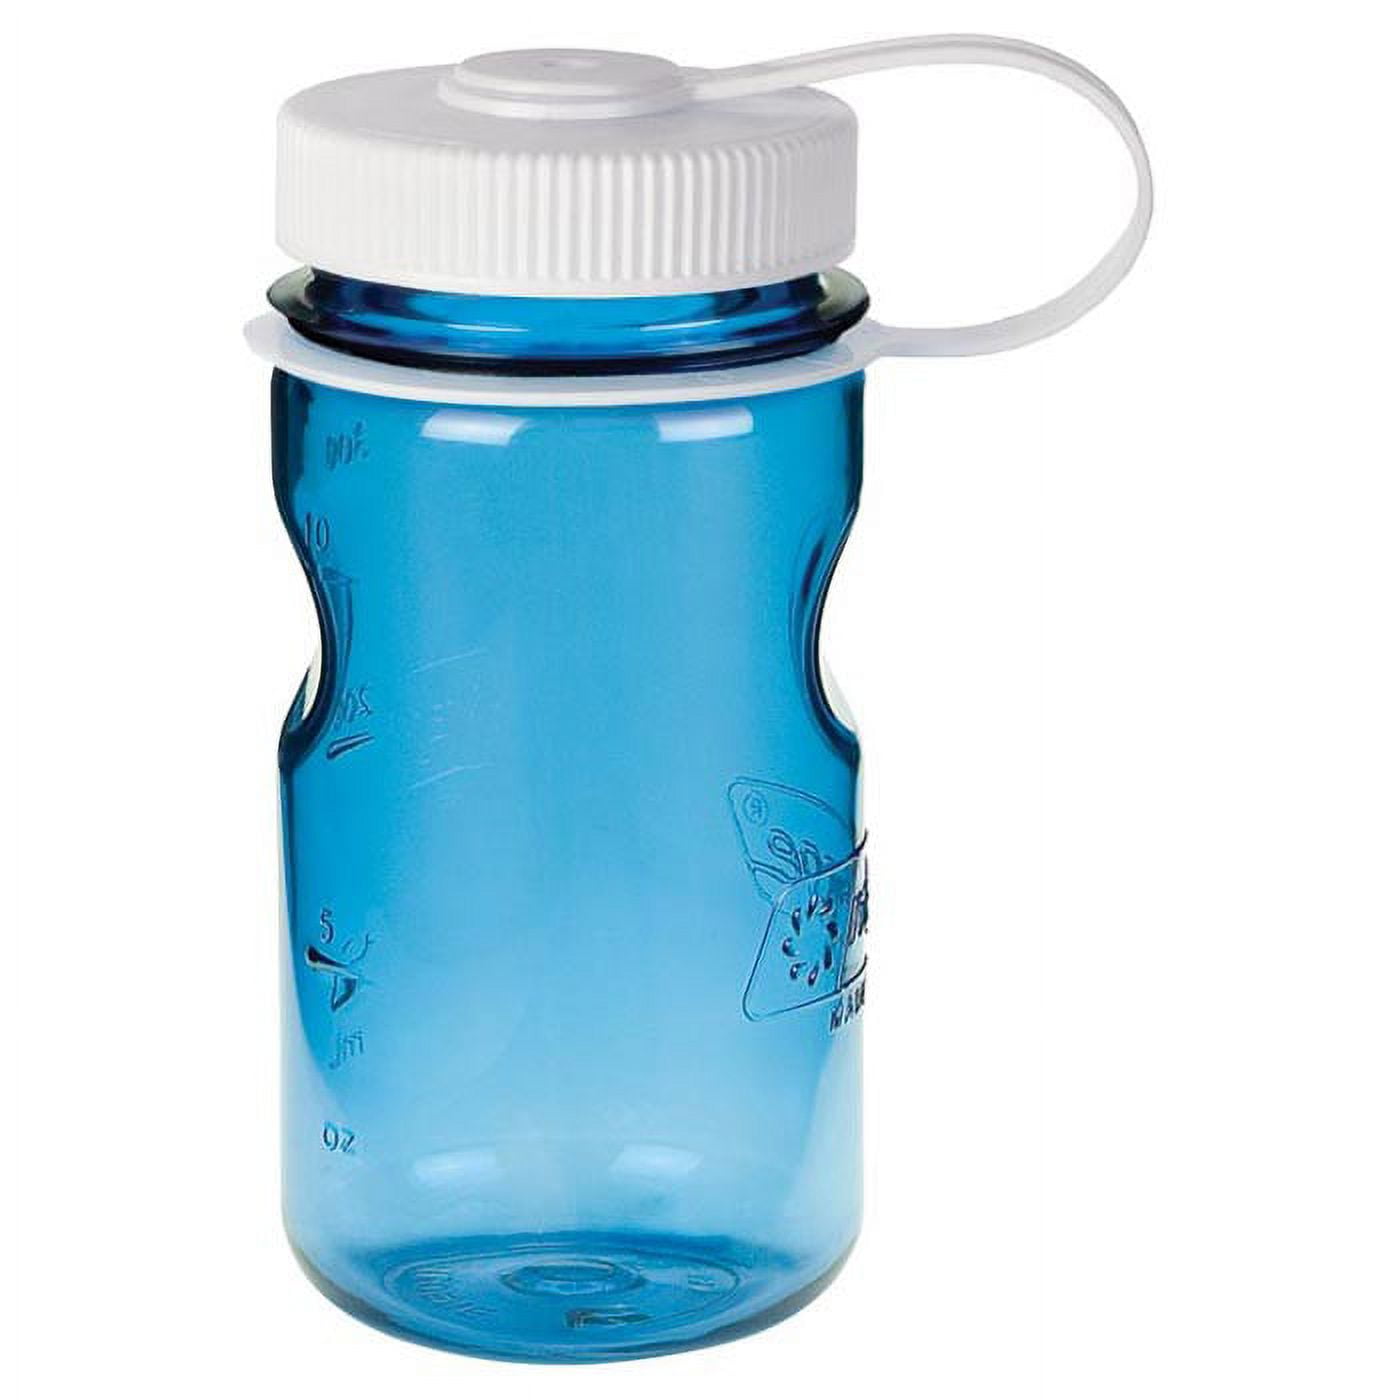  Mininoo Kids Water Bottle with Straw, Insulated 12 oz